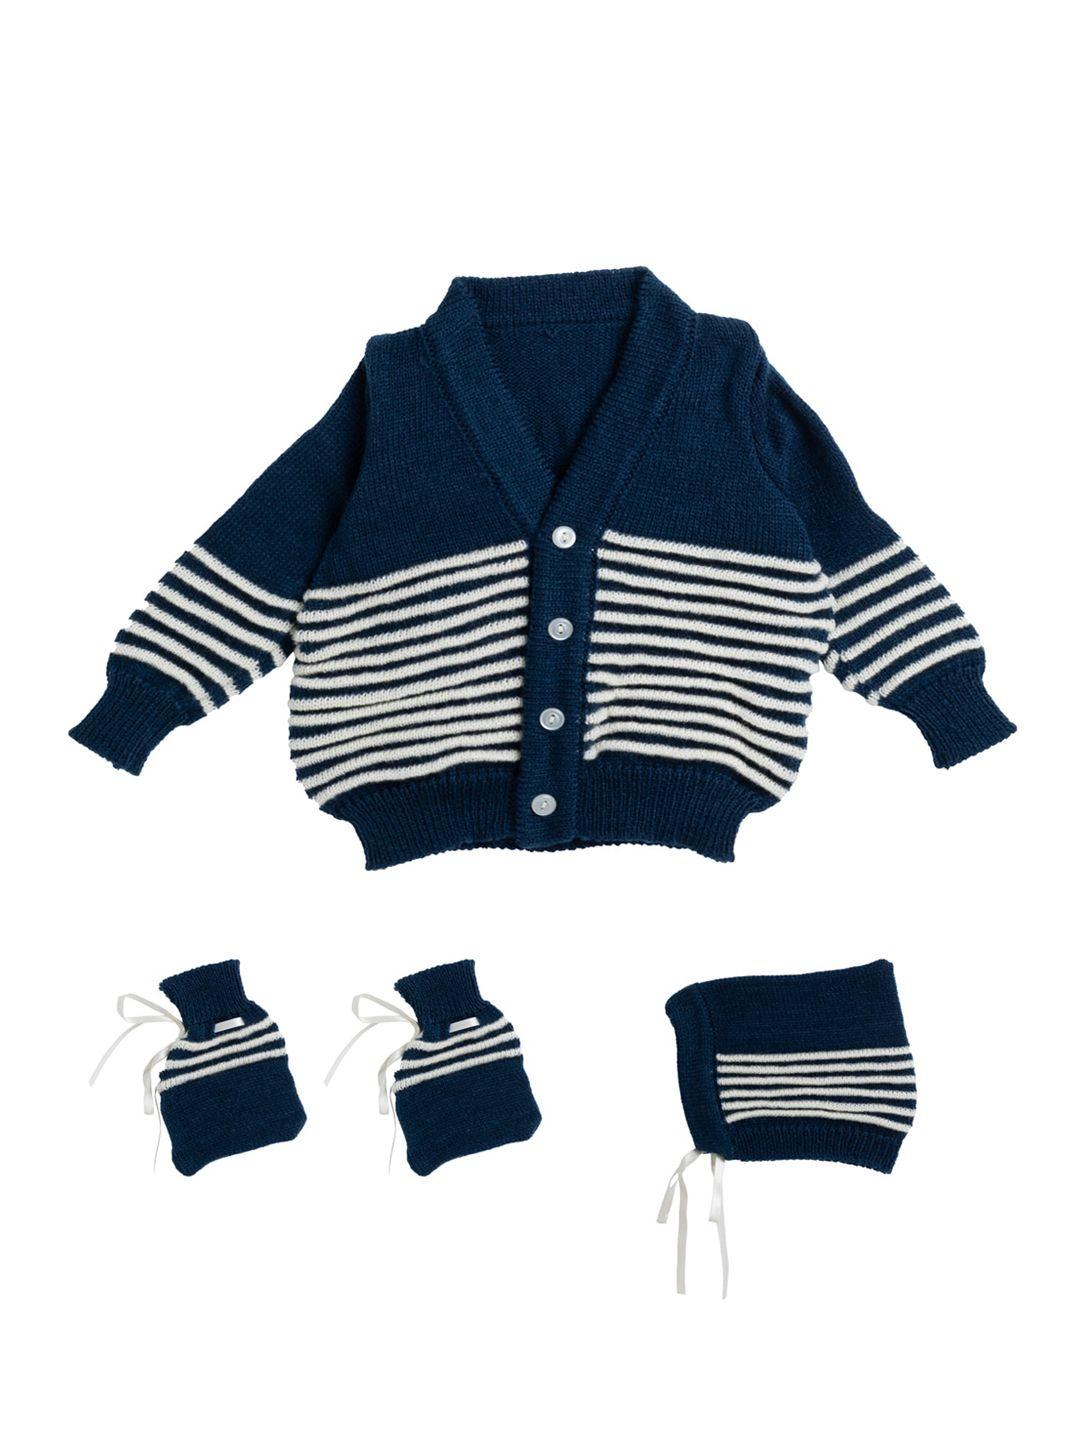 little-angels-unisex-kids-navy-blue-striped-cardigan-sweater